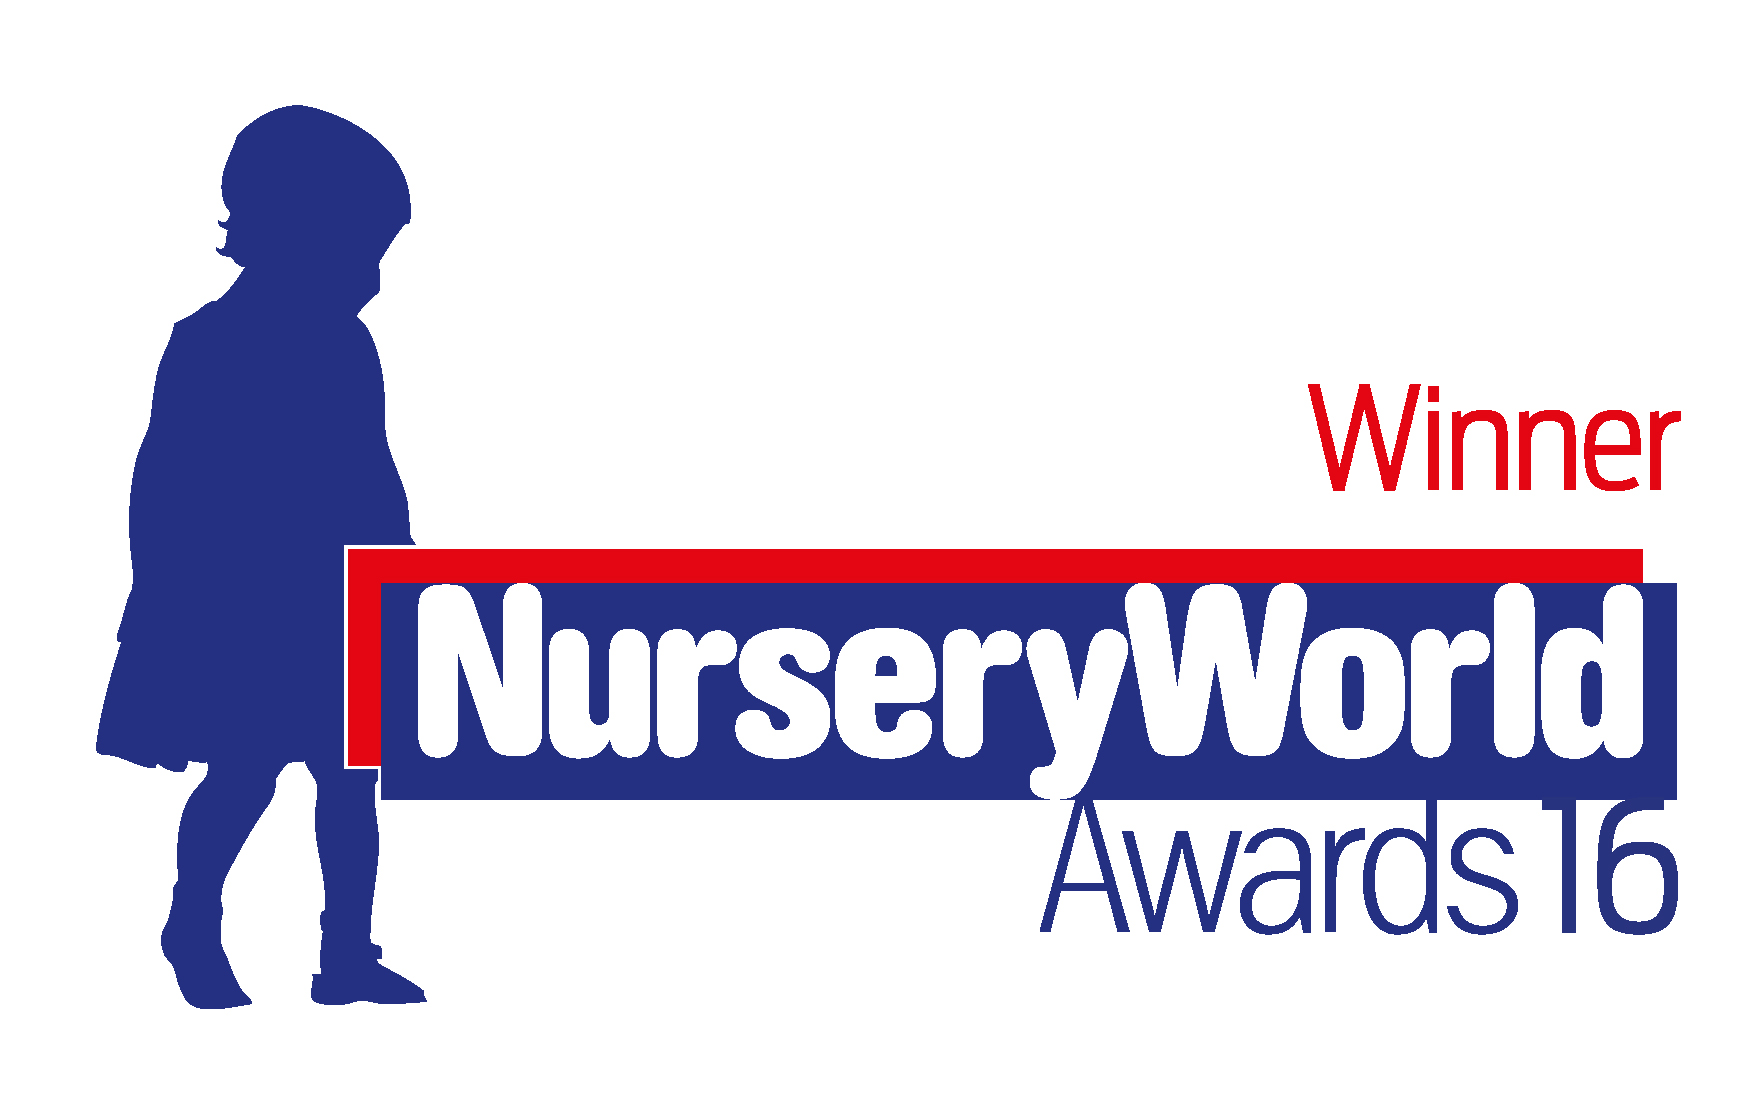 Nursery World Awards